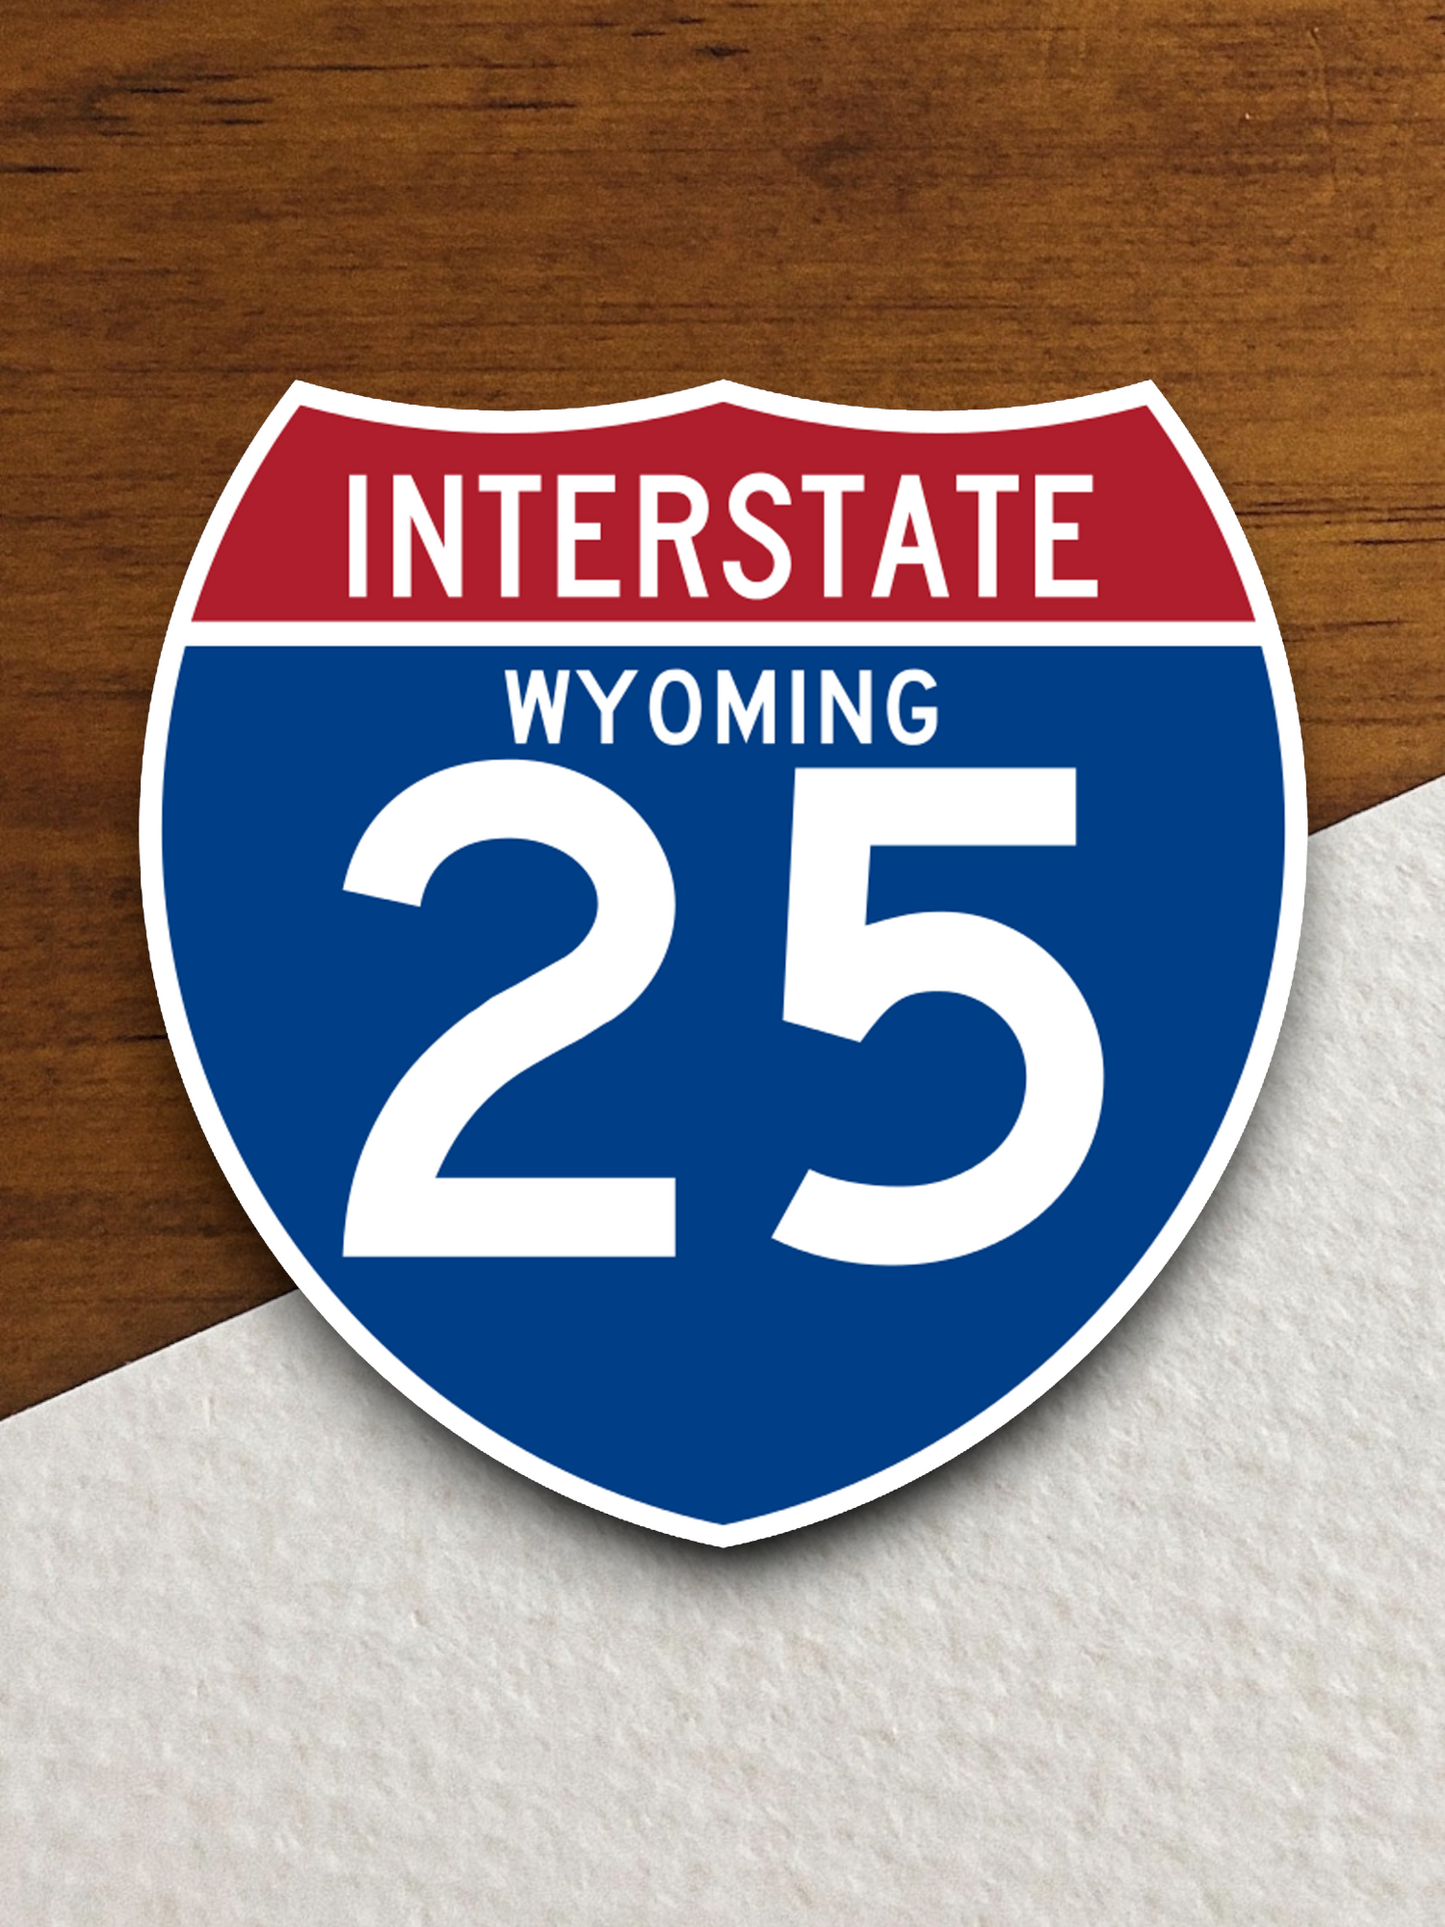 Interstate I-25 Wyoming - Road Sign Sticker